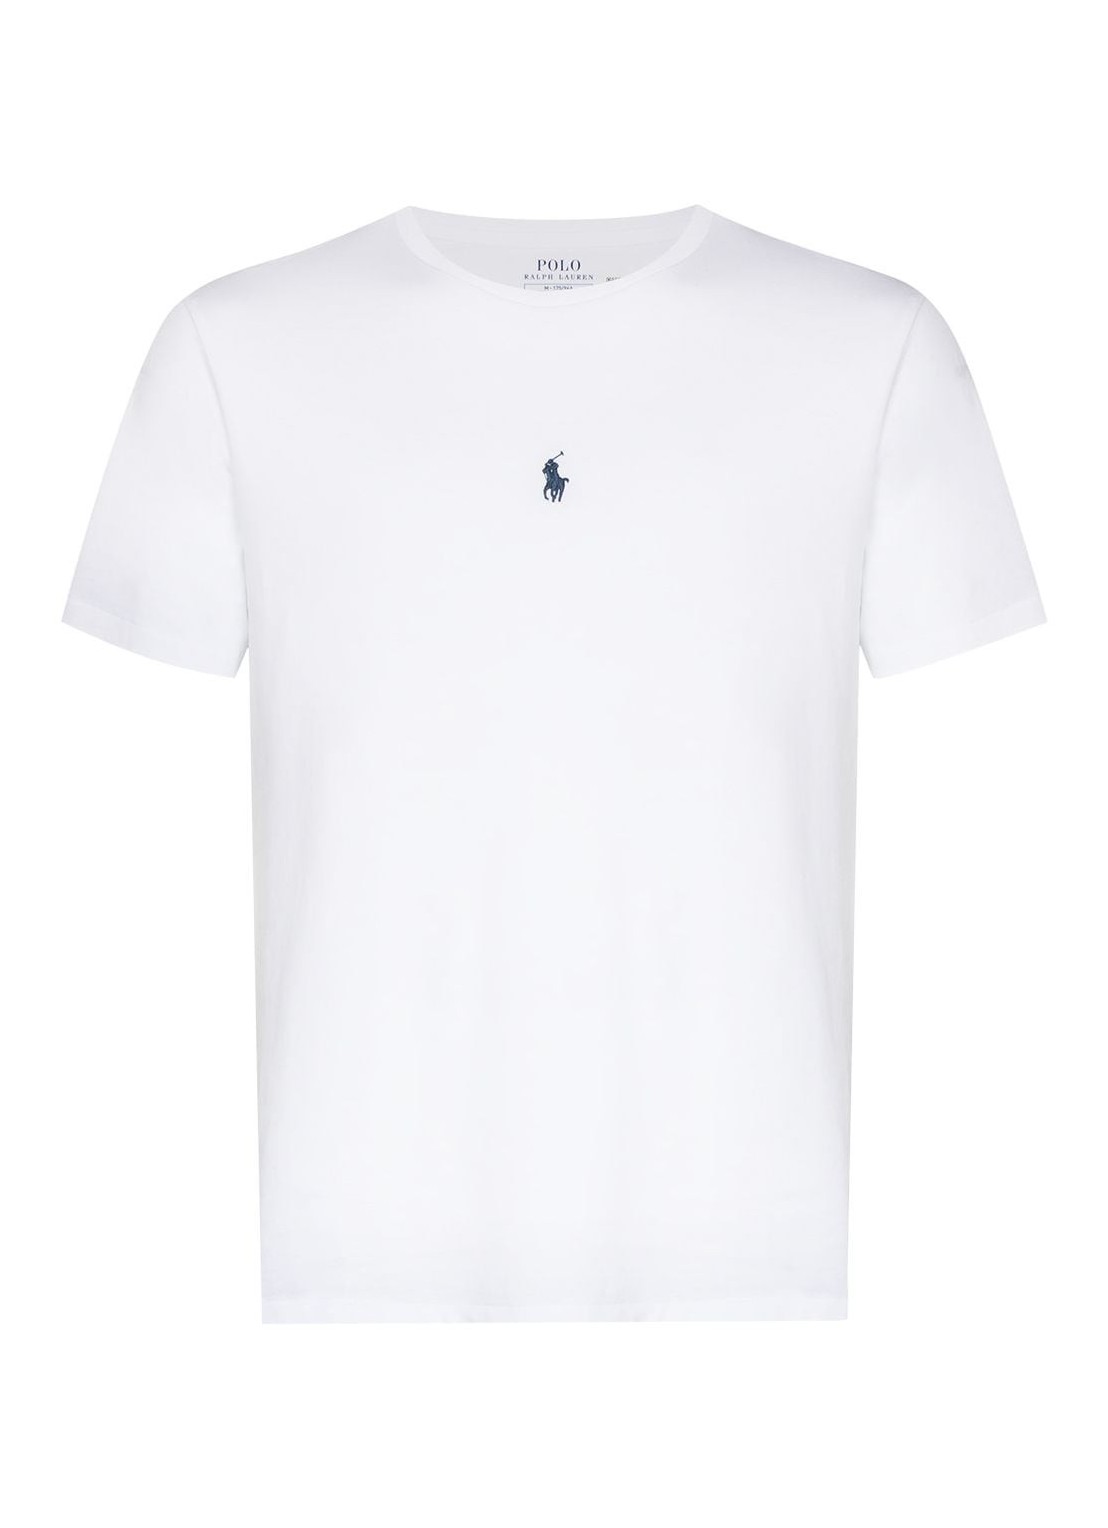 Camiseta polo ralph lauren t-shirt man knit shirts 710839046002 white talla L
 